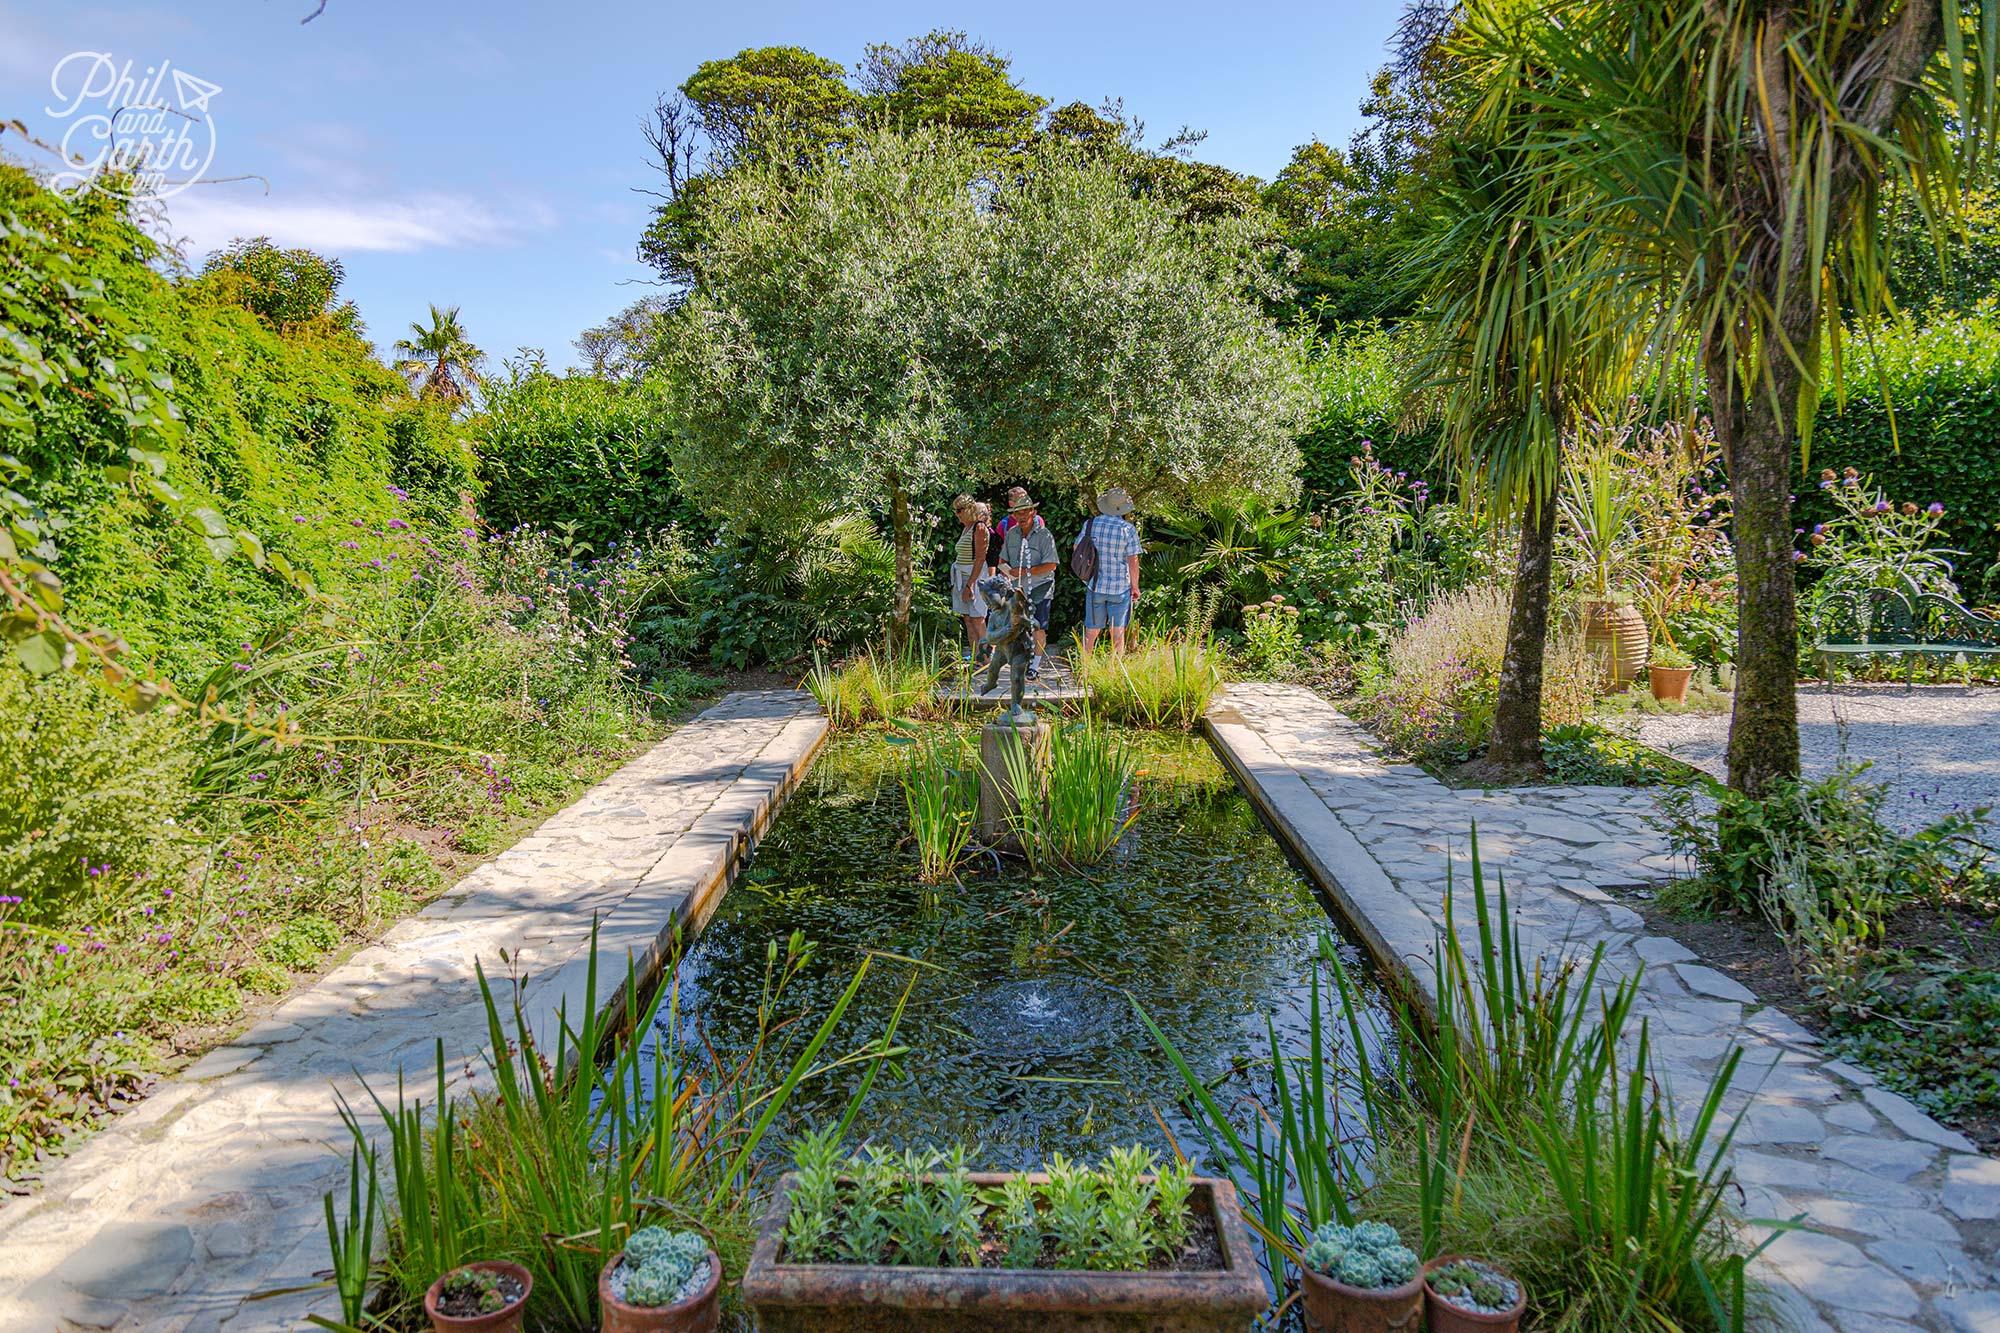 The Lost Gardens of Heligan's secret Italian Garden